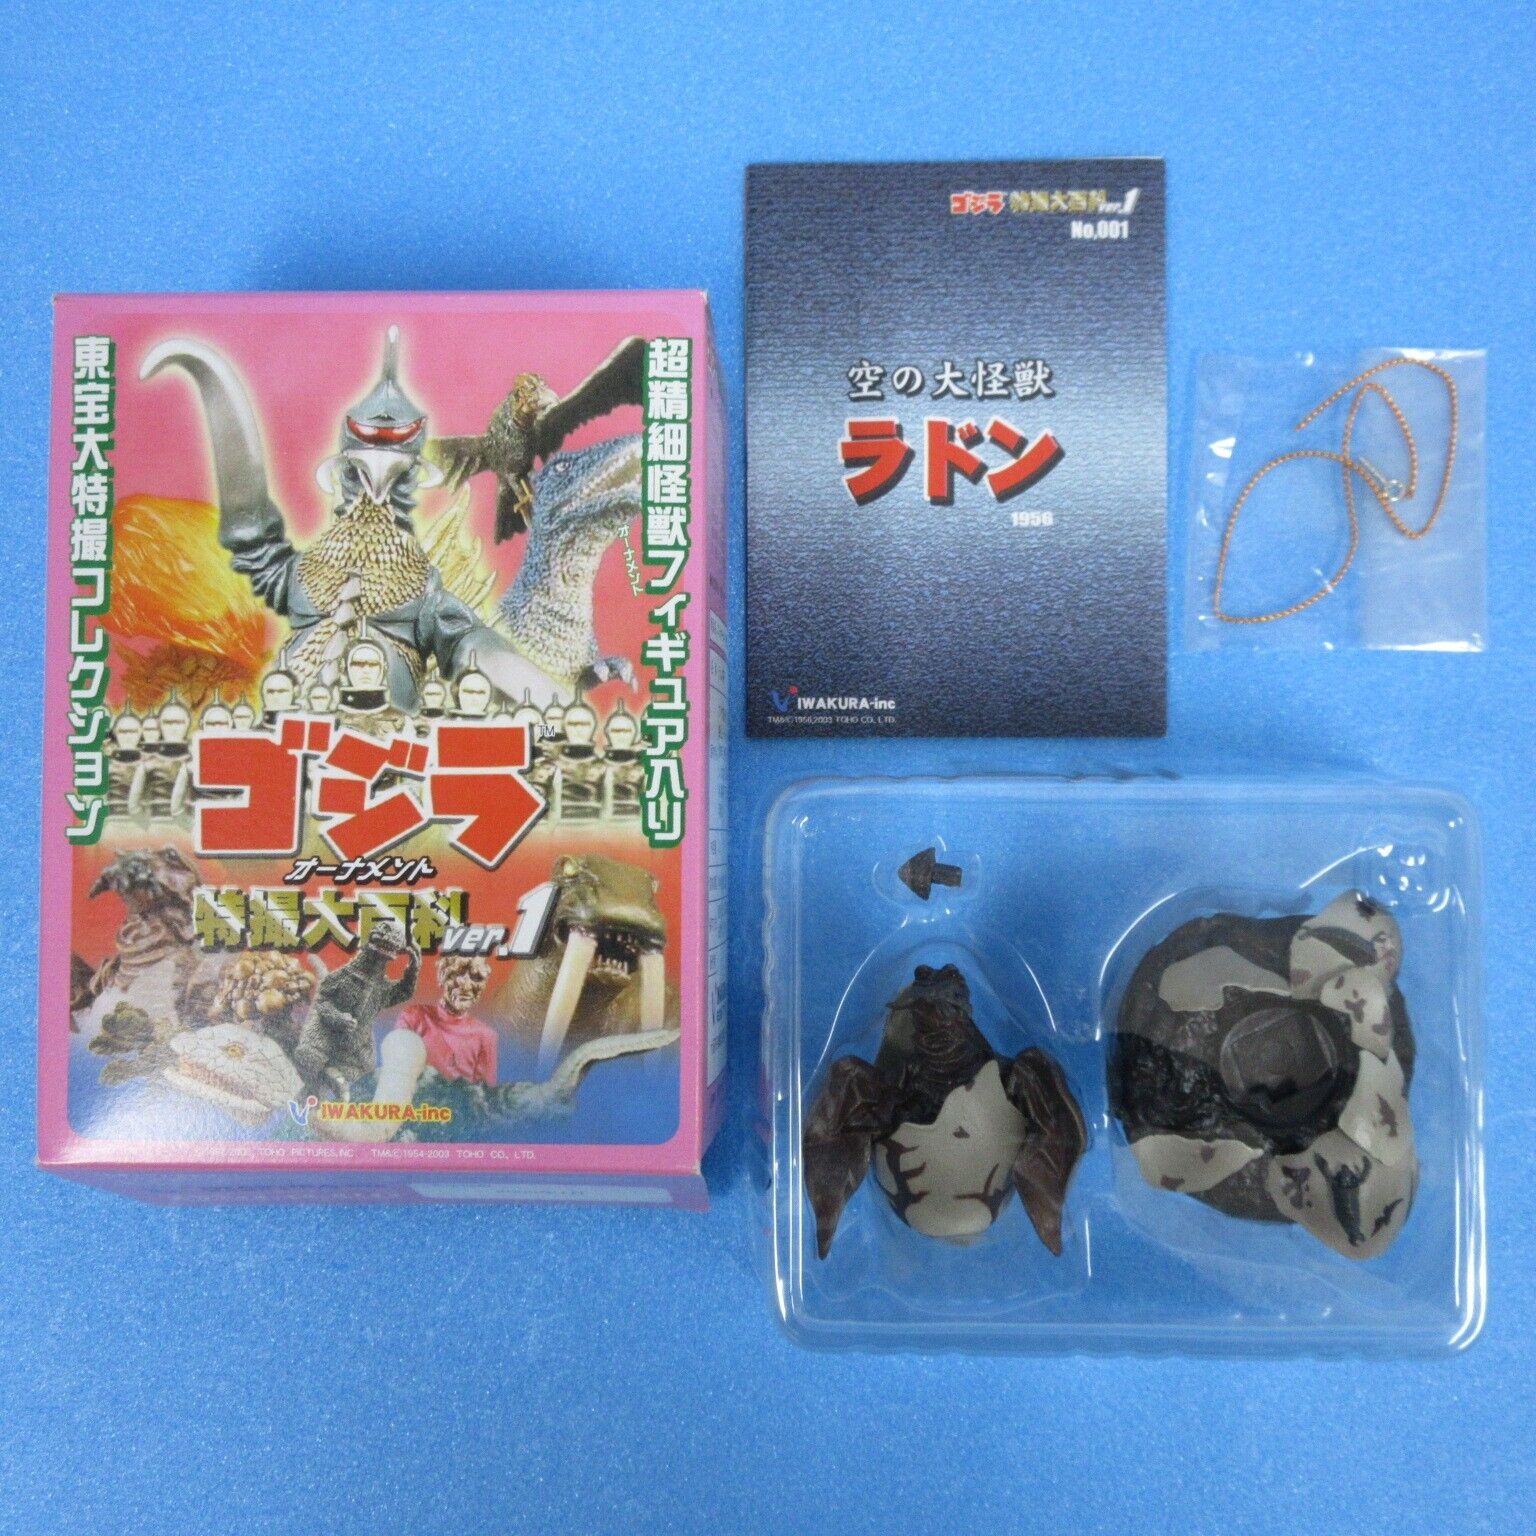 Godzilla Tokusatsu Encyclopedia Rodan Radon Colored Ver. Figure Iwakura official